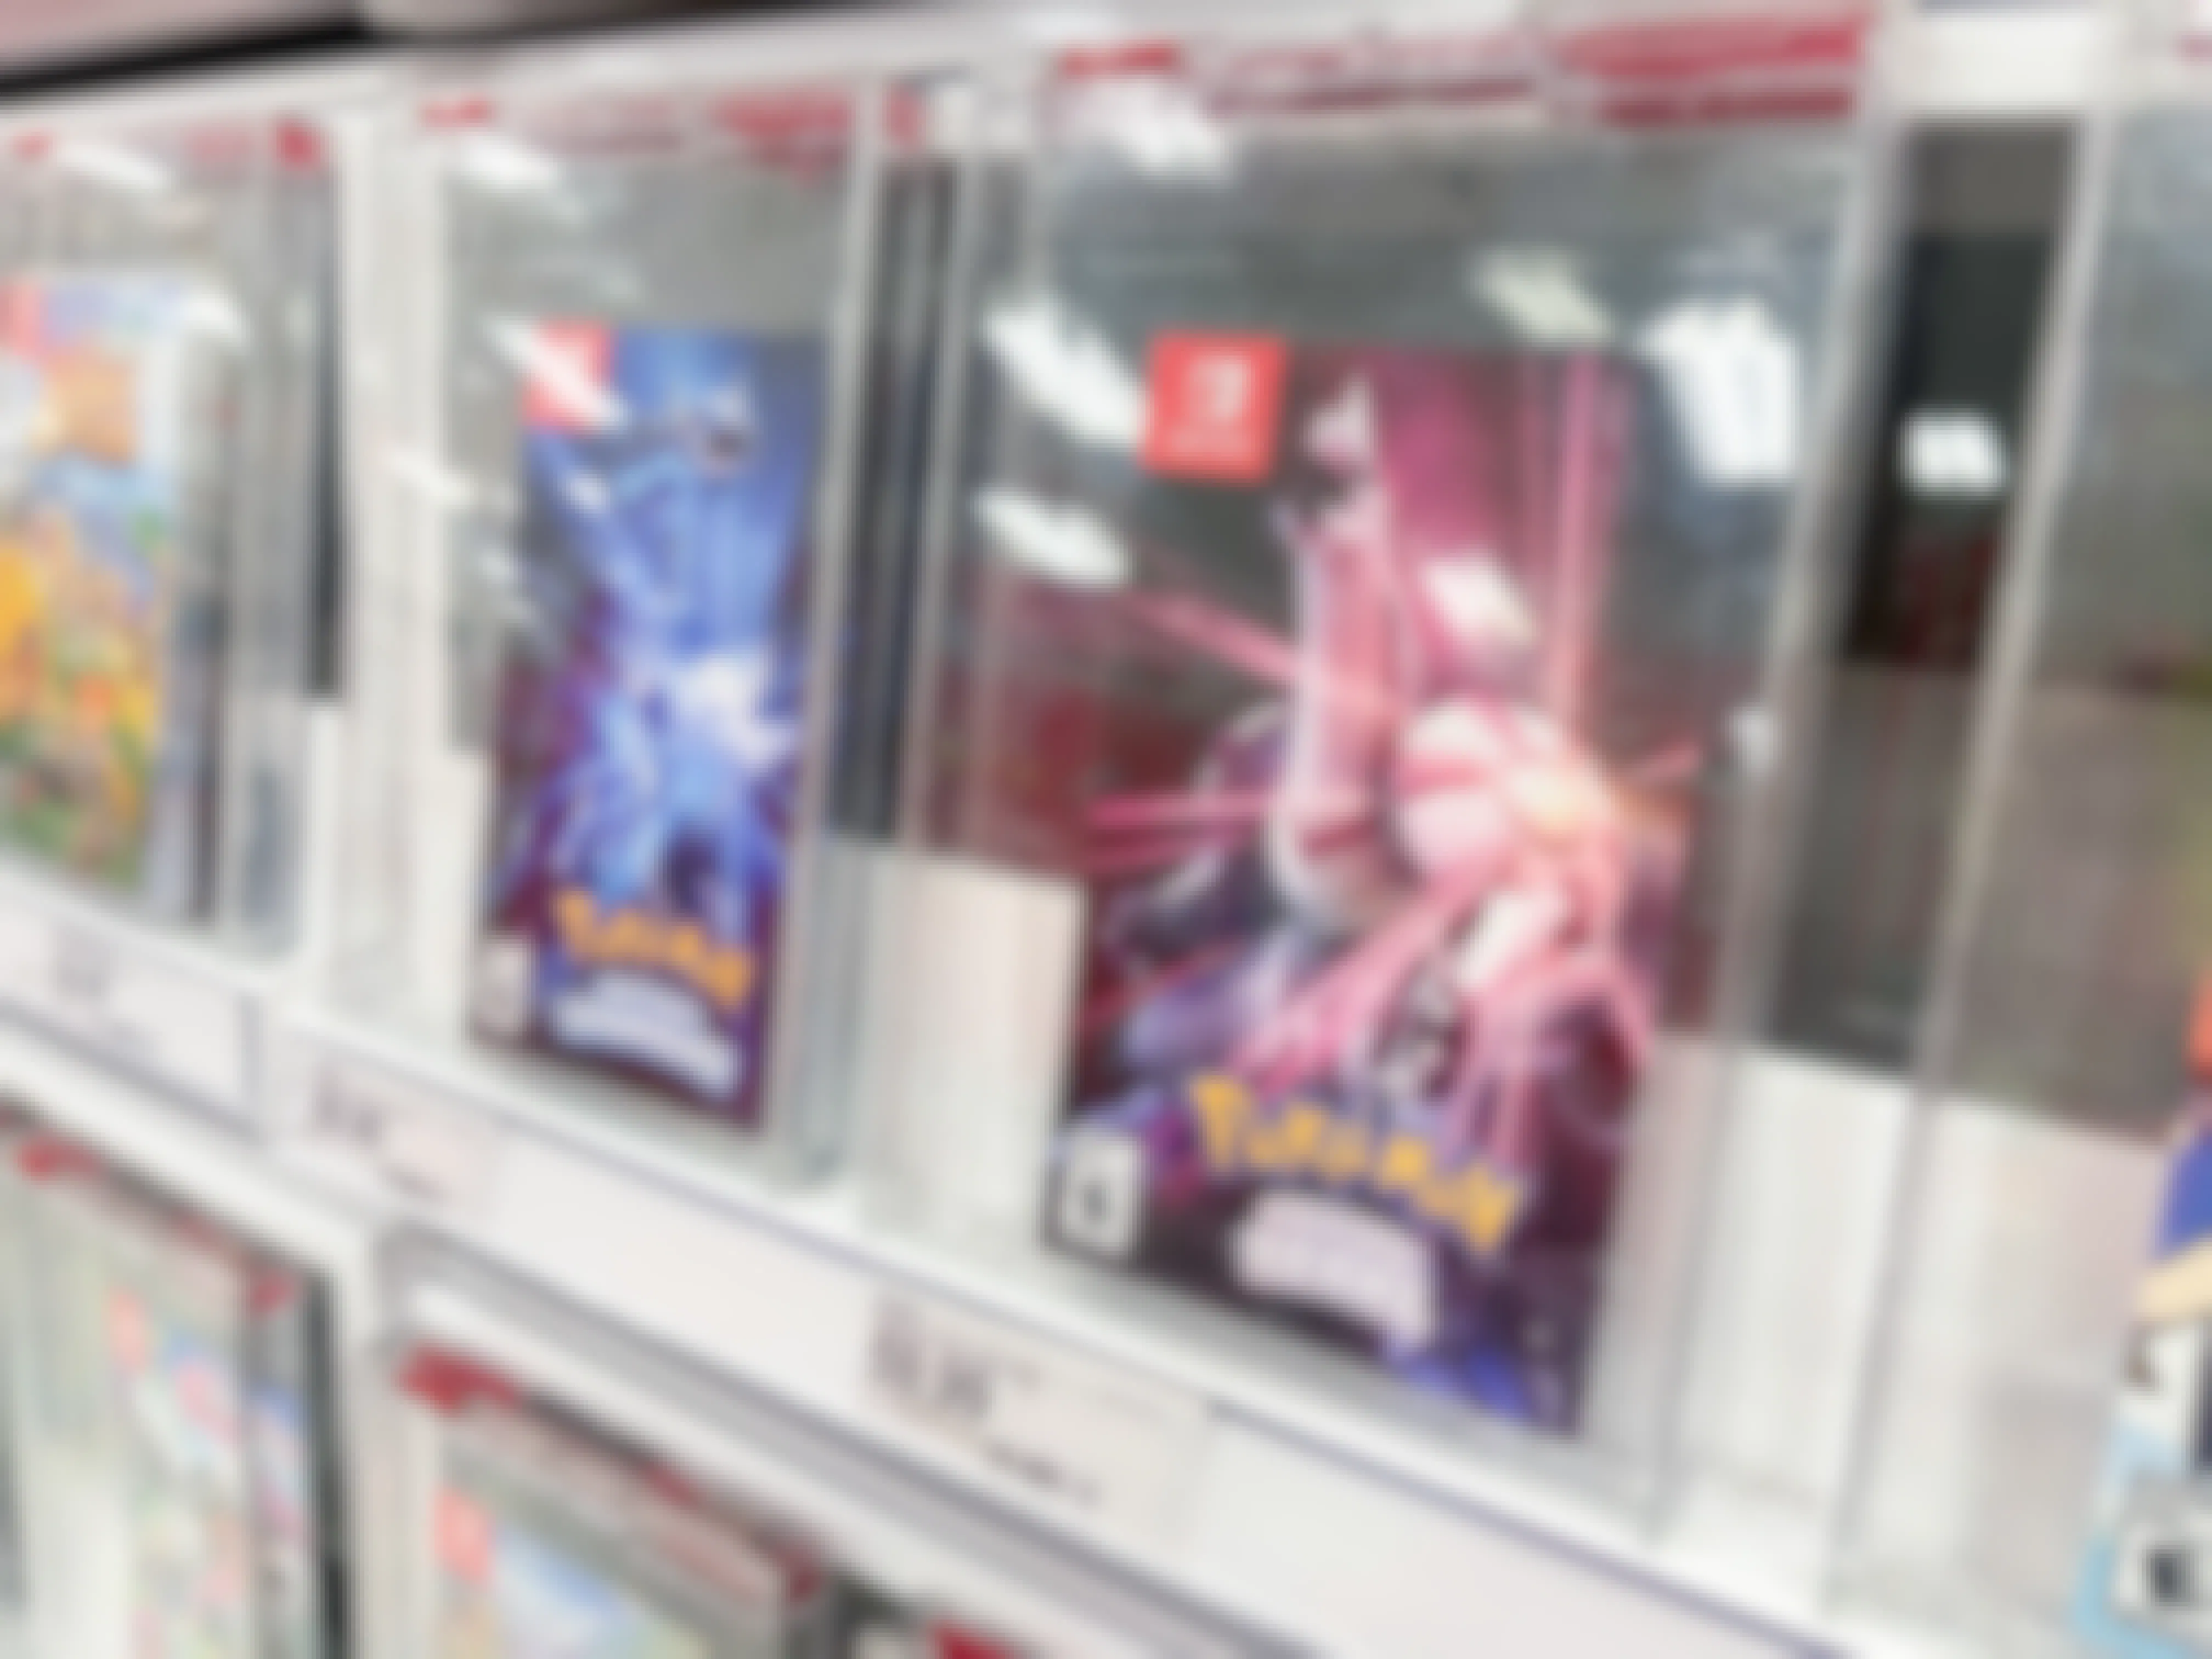 pokemon nintendo switch games on the shelf at target: pokemon brilliant diamond and pokemon shining pearl